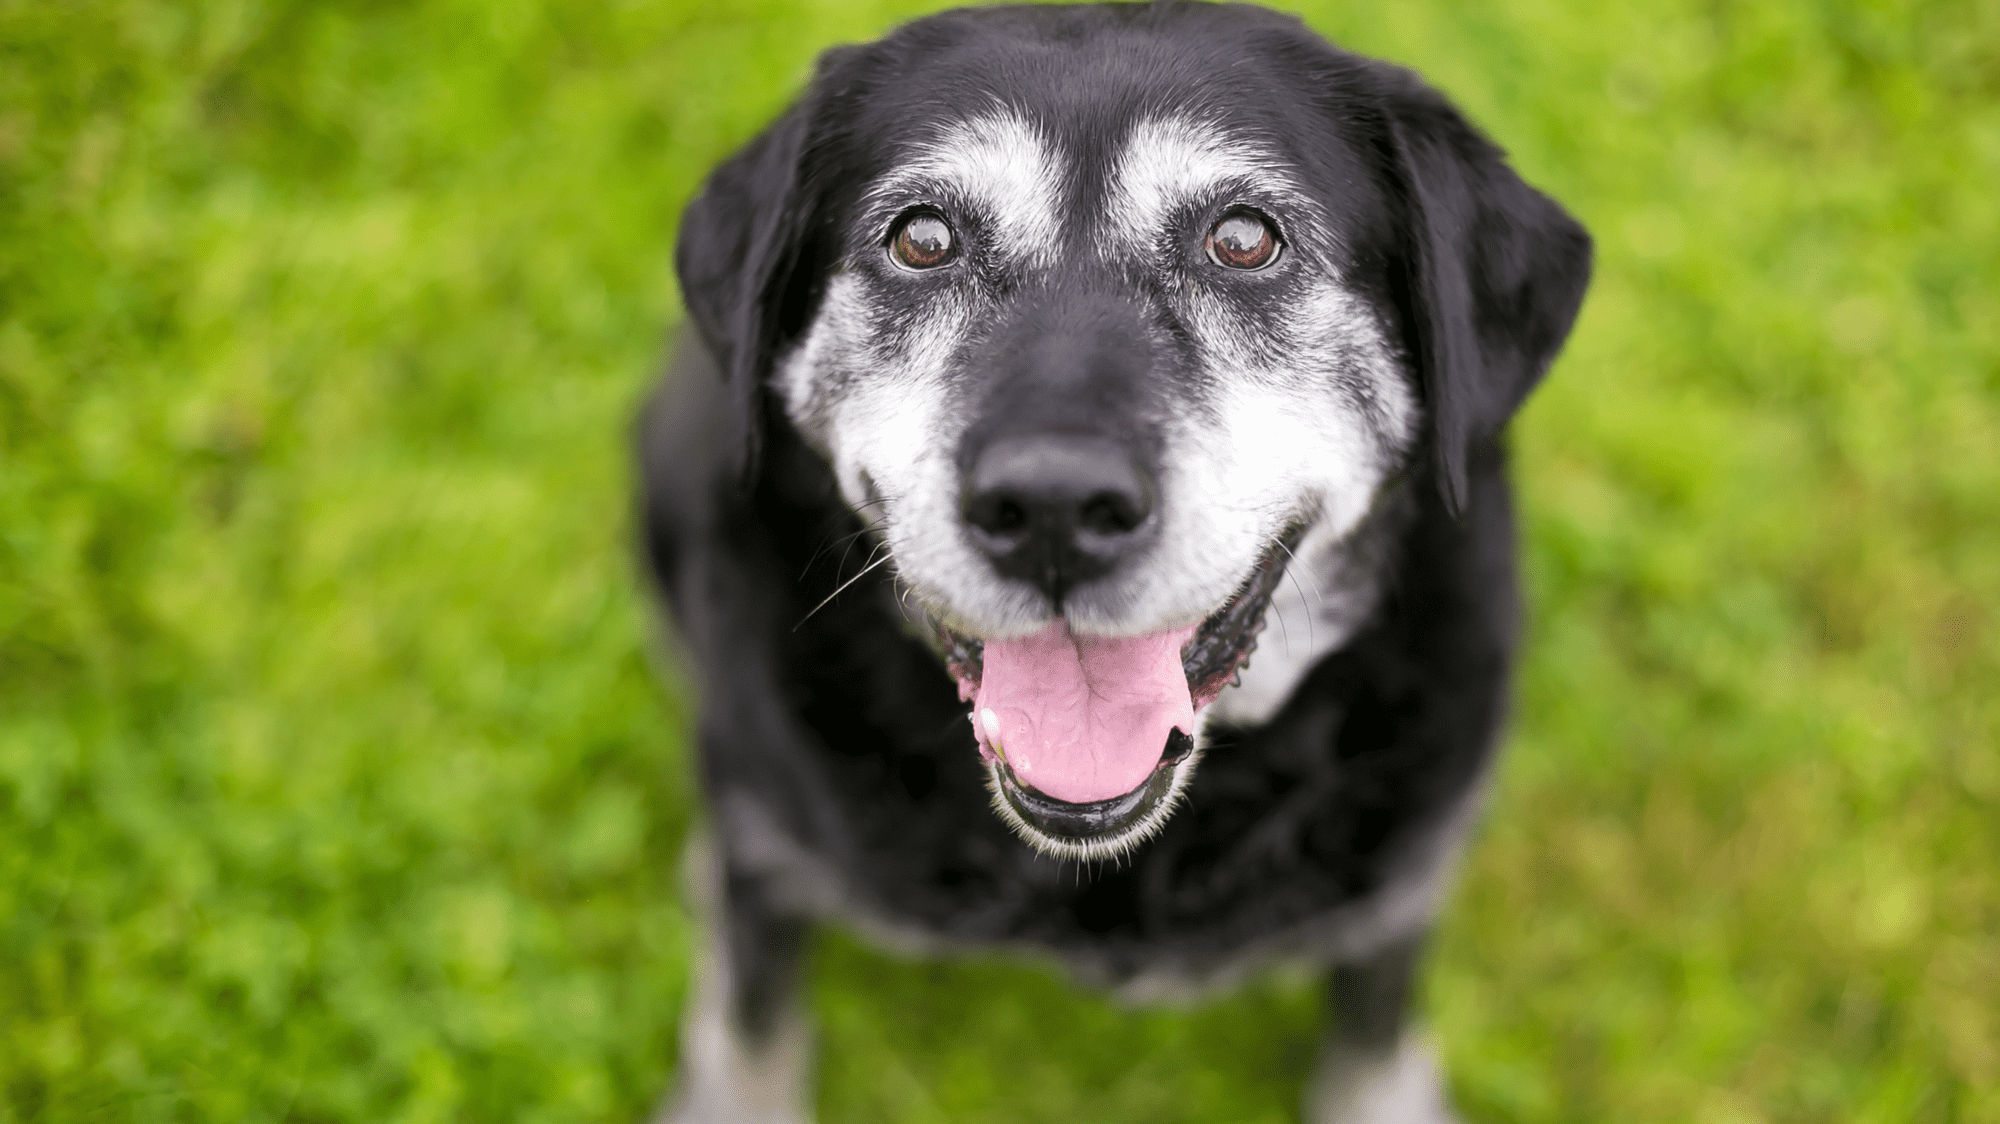 Black and white senior dog